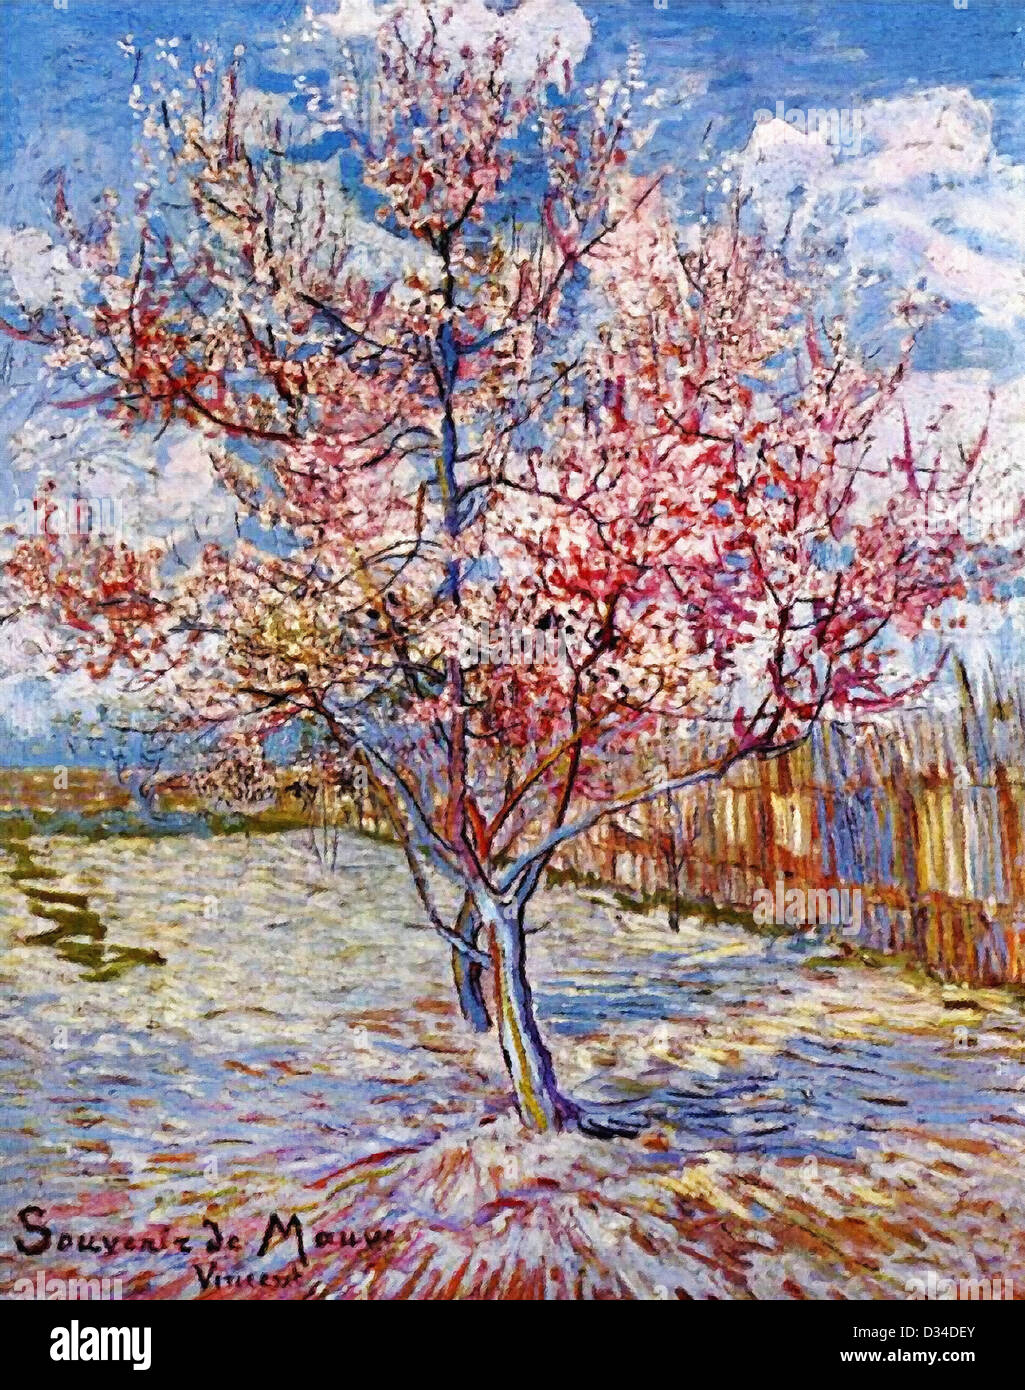 Vincent van Gogh: albero di pesco in fiore (in memoria di malva). 1888. Olio su tela. Rijksmuseum Kröller-Müller, Otterlo,Olanda Foto Stock